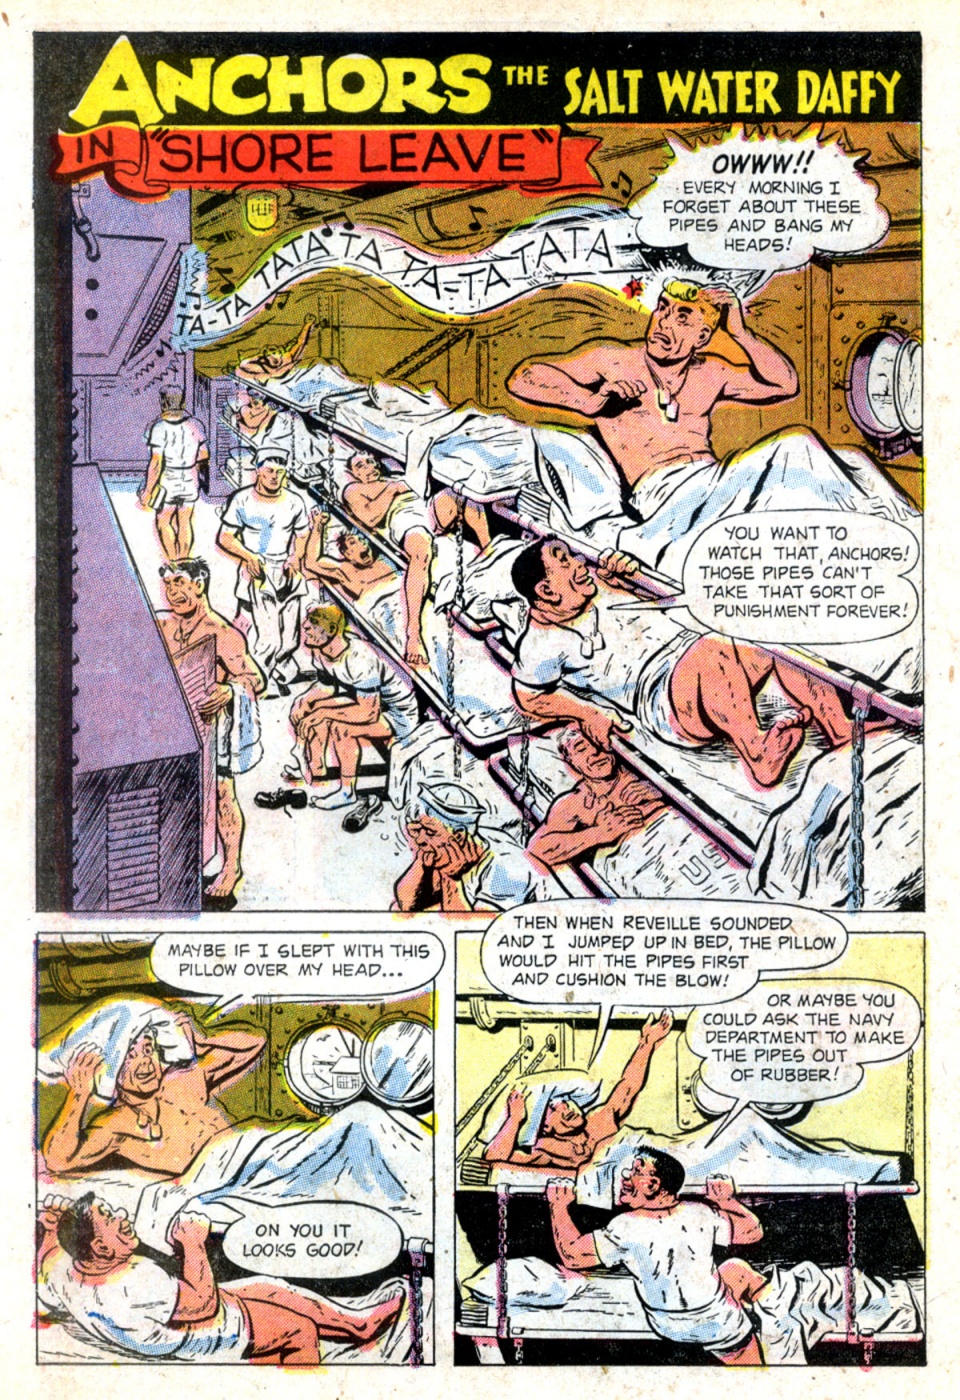 Anchors the Salt Water Daffy - Comics (b) (12)